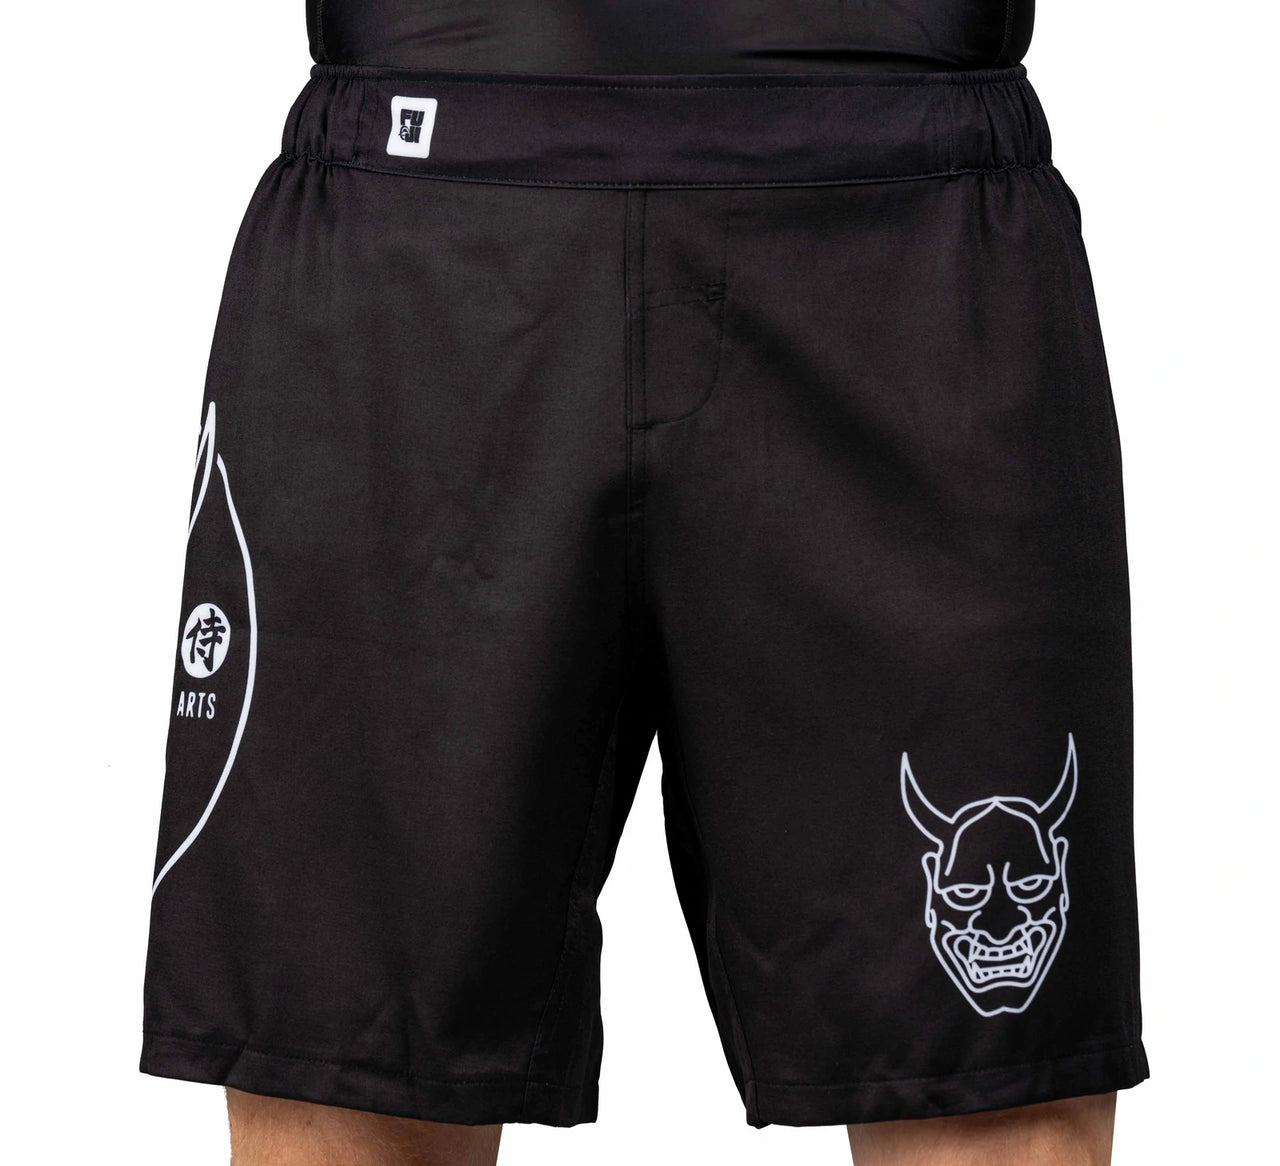 Fuji "Dark Arts" Lightweight Shorts